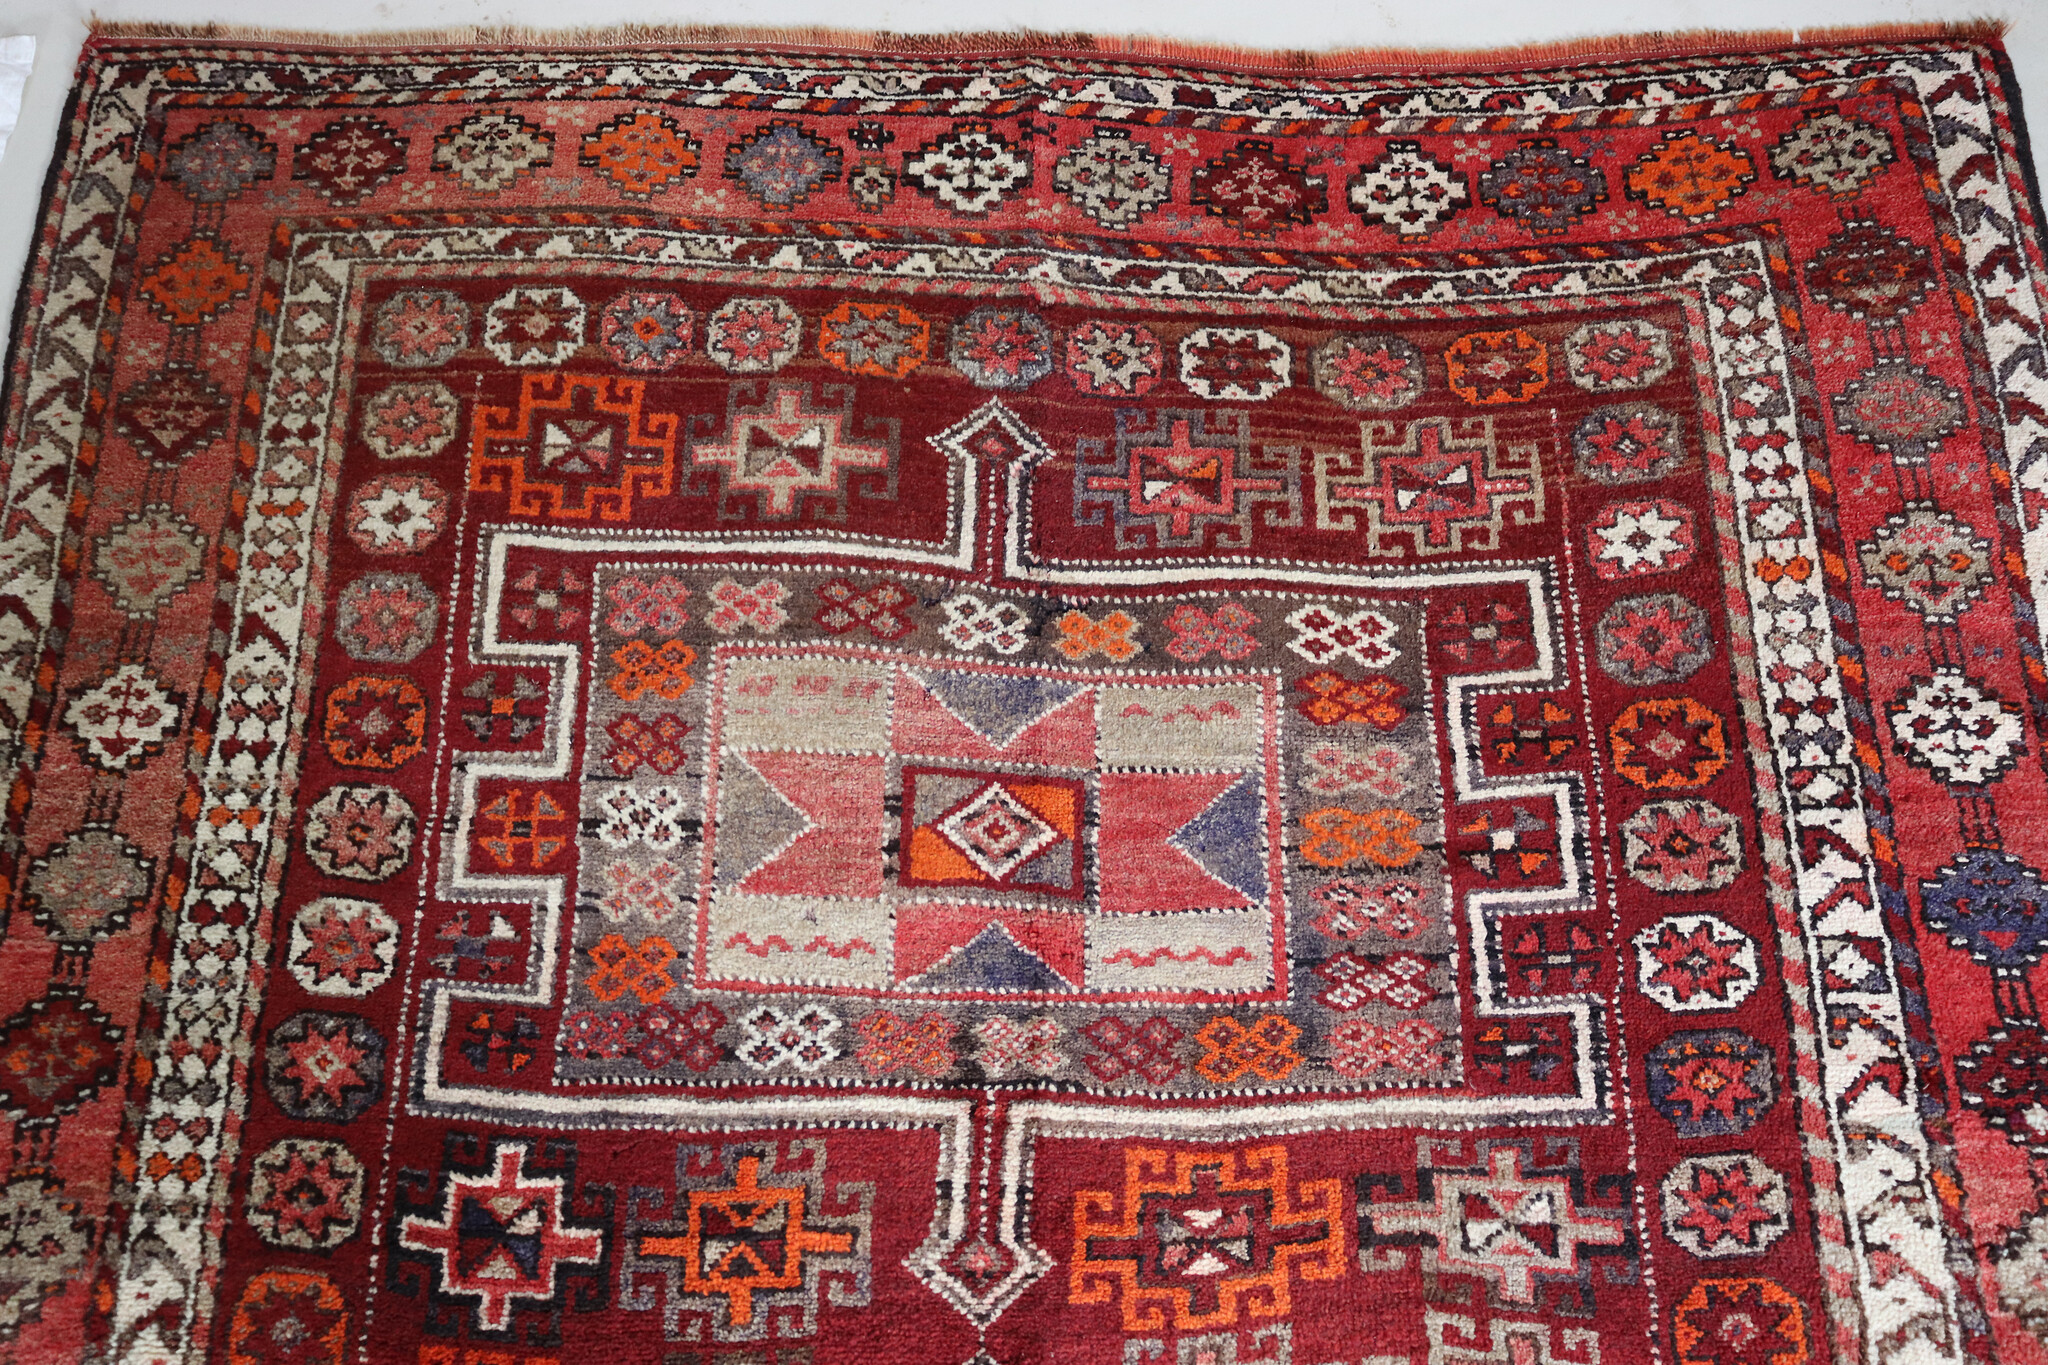 290x160 cm Vintage Oriental Hand Knotted  nomadic kurdish Rug Carpet  No:23/3